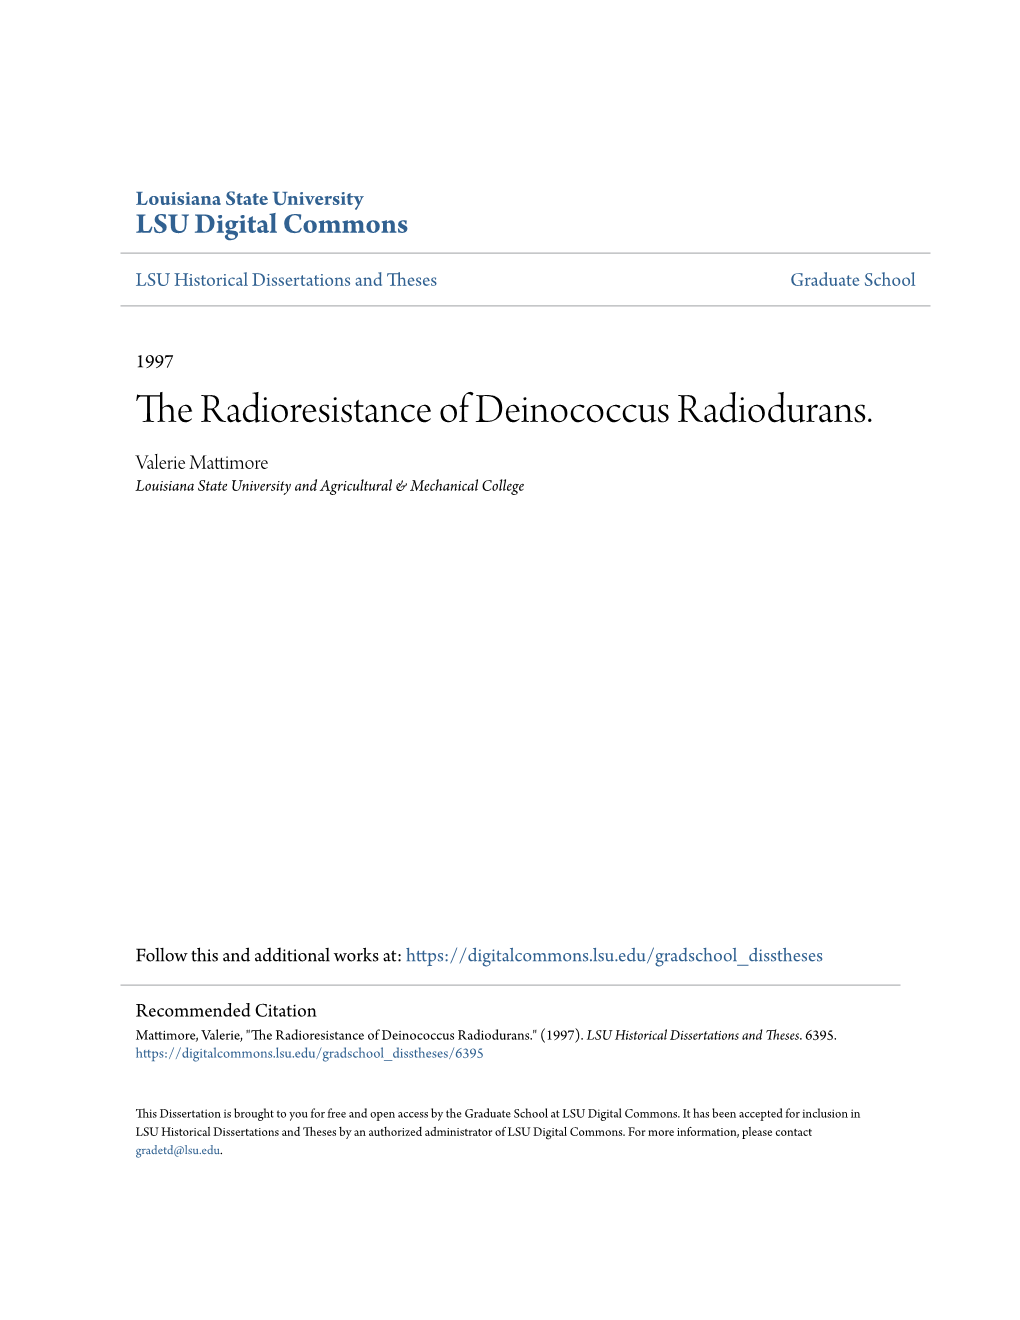 The Radioresistance of Deinococcus Radiodurans. Valerie Mattimore Louisiana State University and Agricultural & Mechanical College